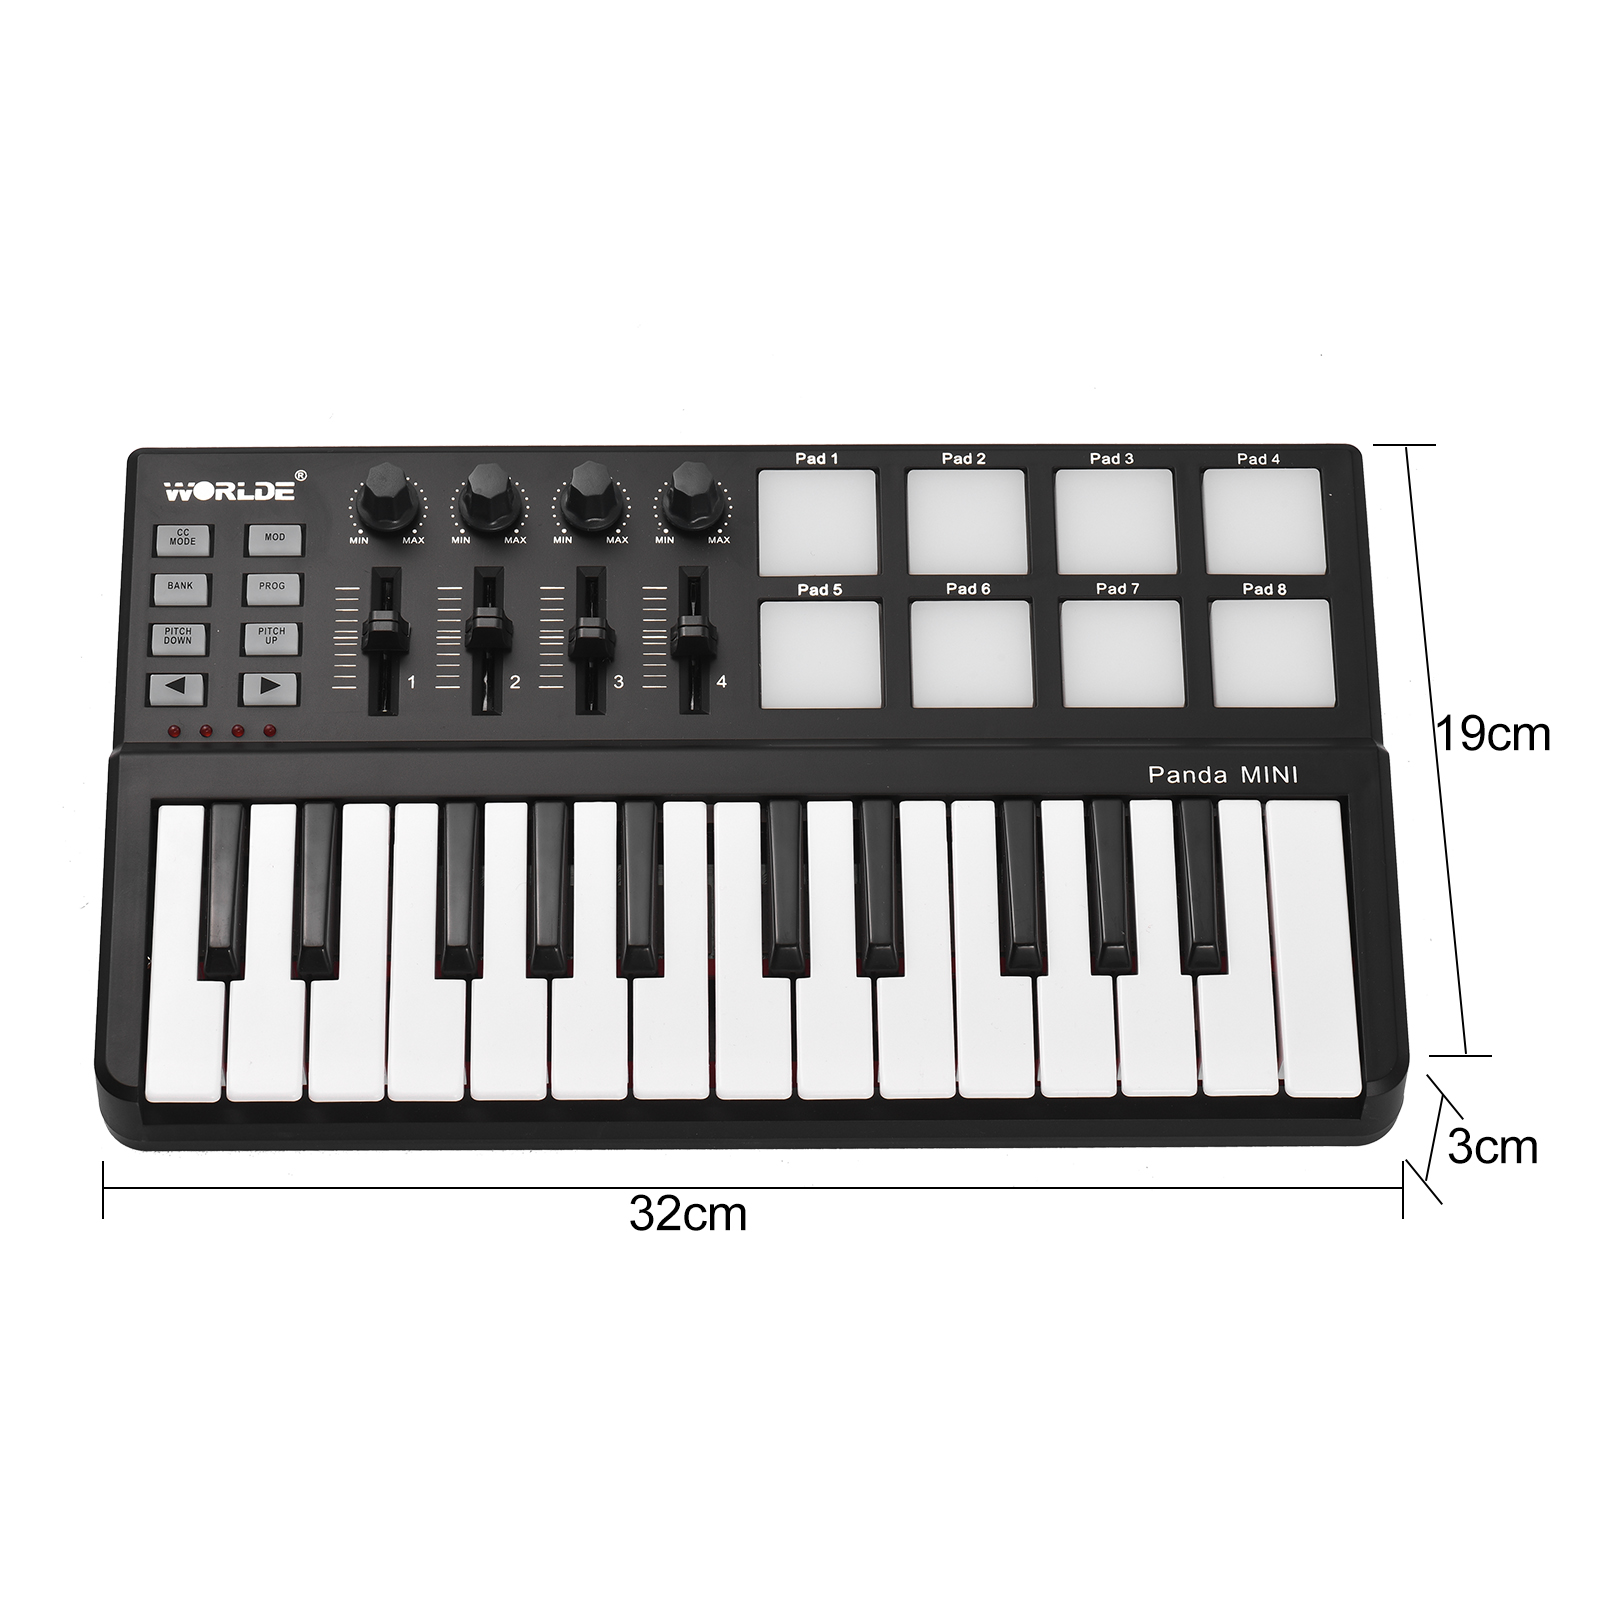 Worlde Panda mini Portable Mini 25-Key USB Keyboard and Drum Pad MIDI Controller - image 2 of 7